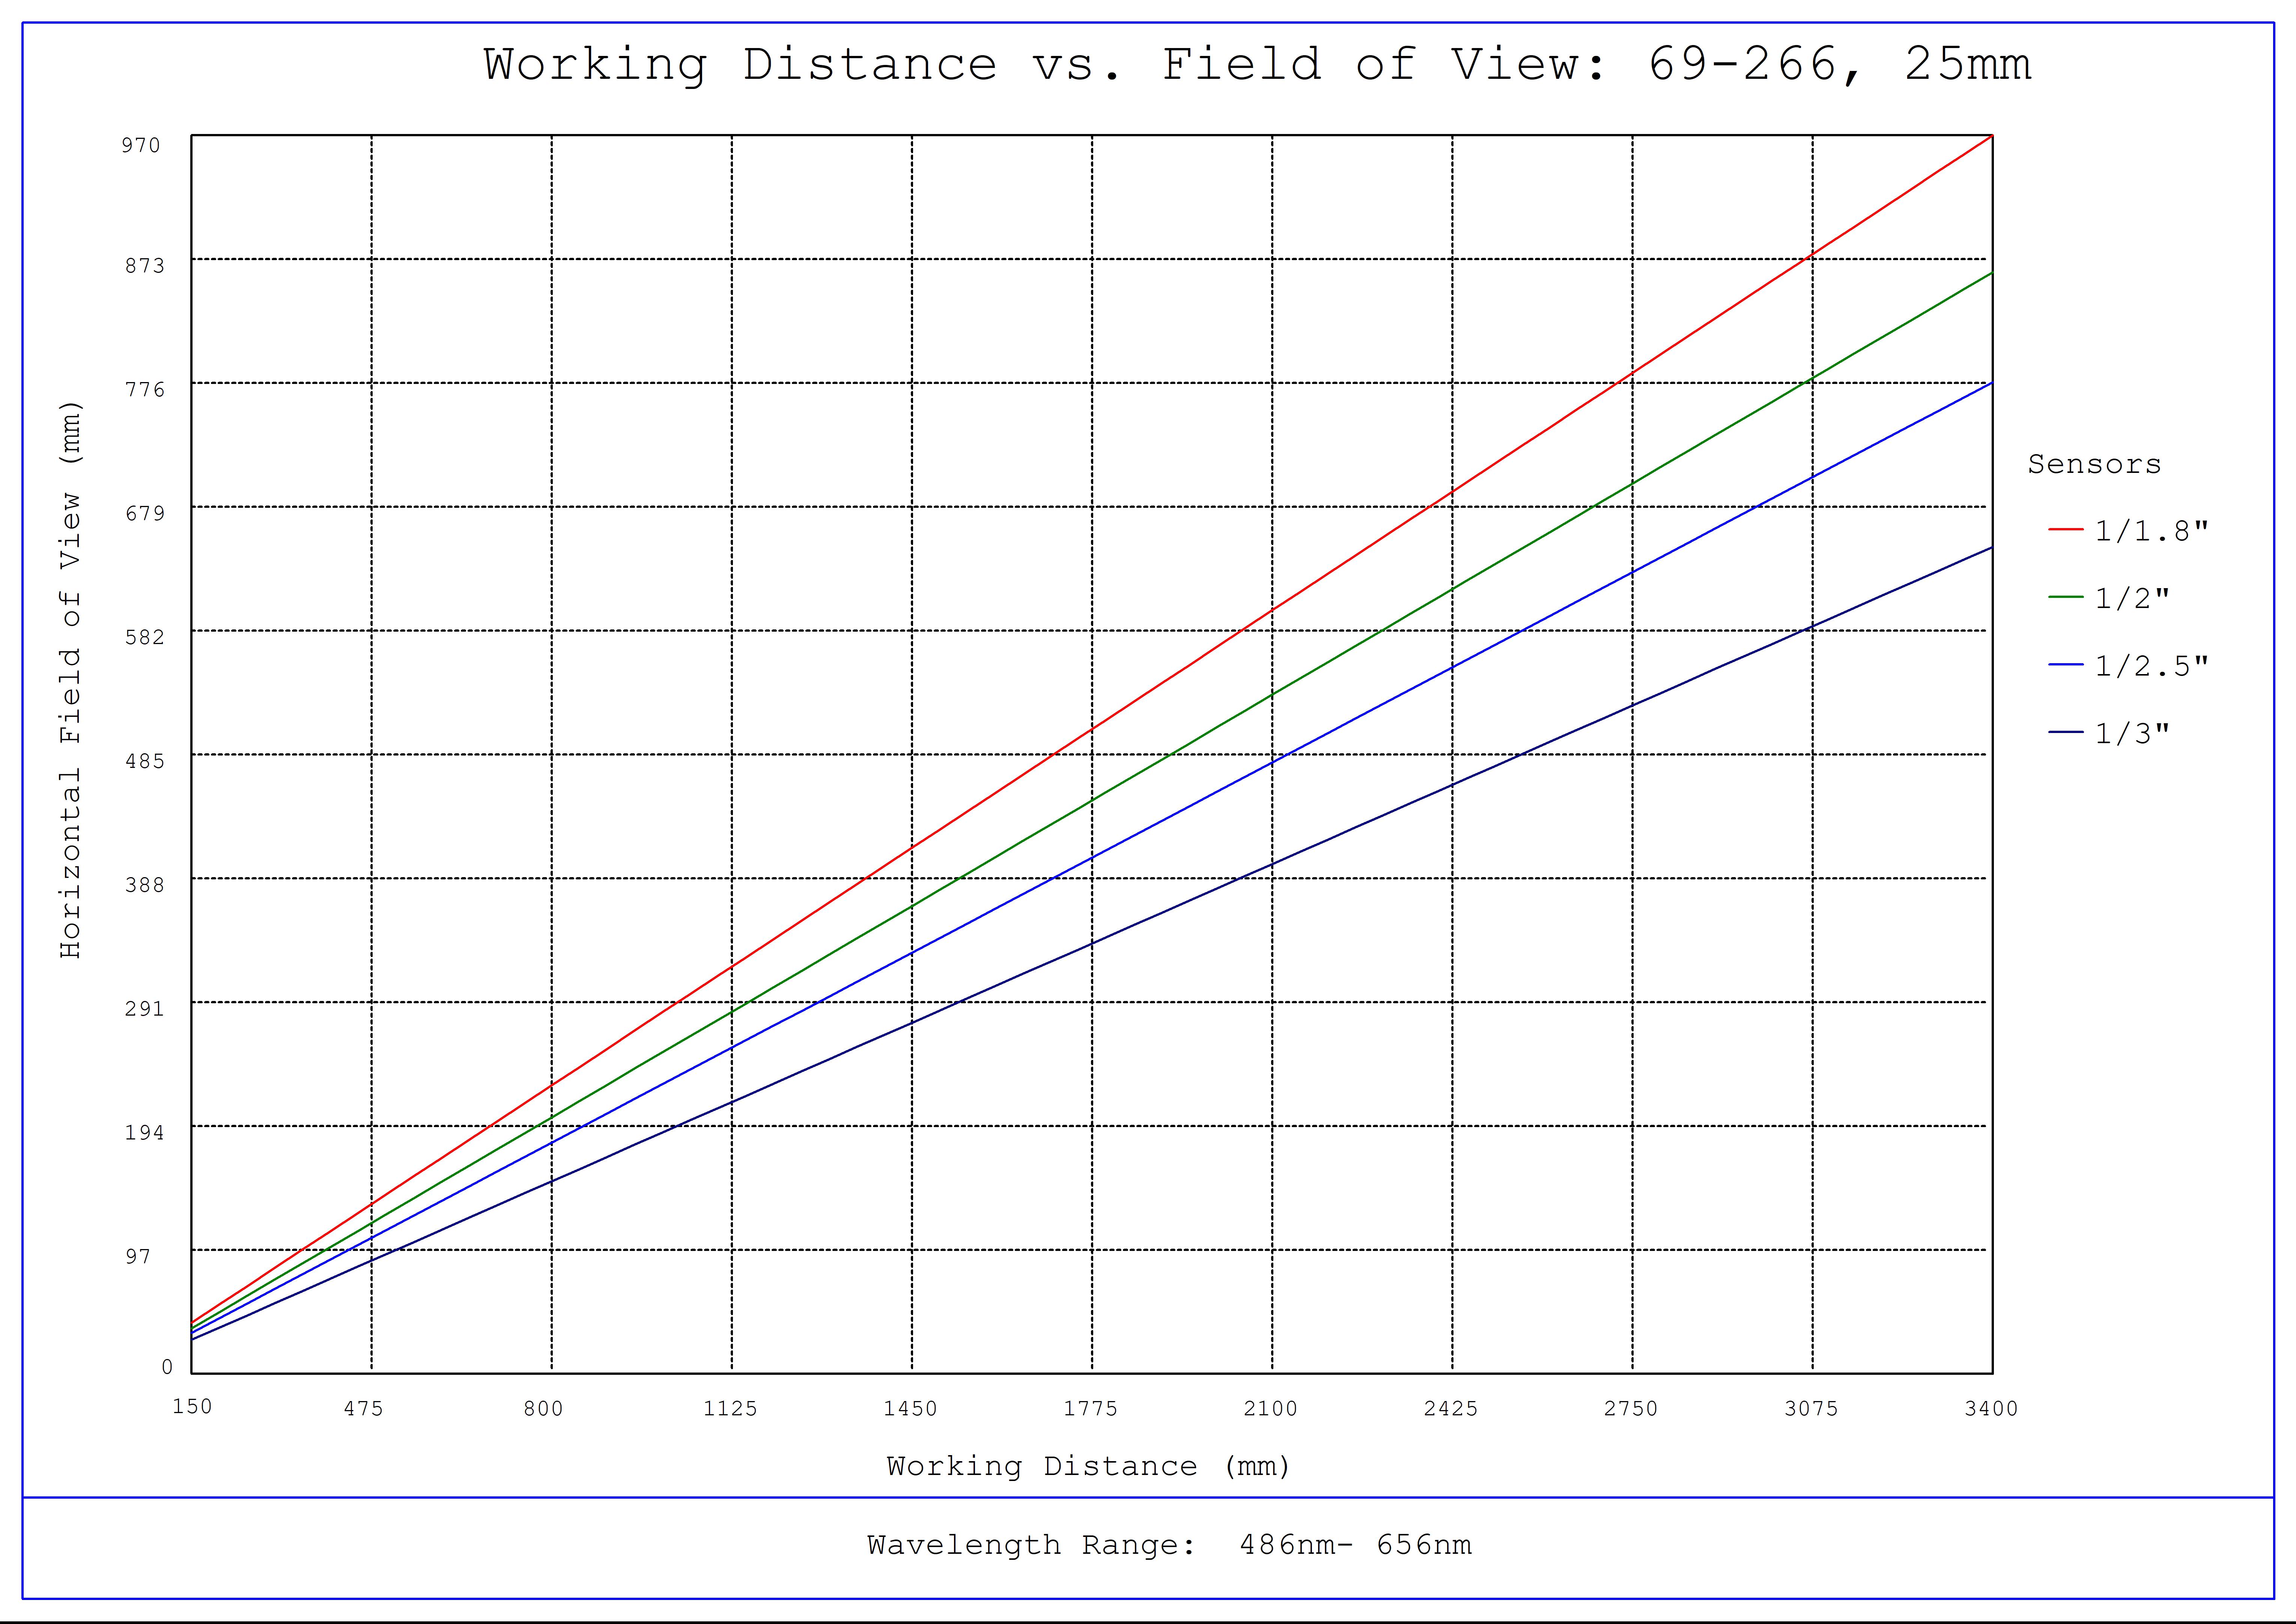 #69-266, 25mm FL f/4, Blue Series M12 Lens, Working Distance versus Field of View Plot